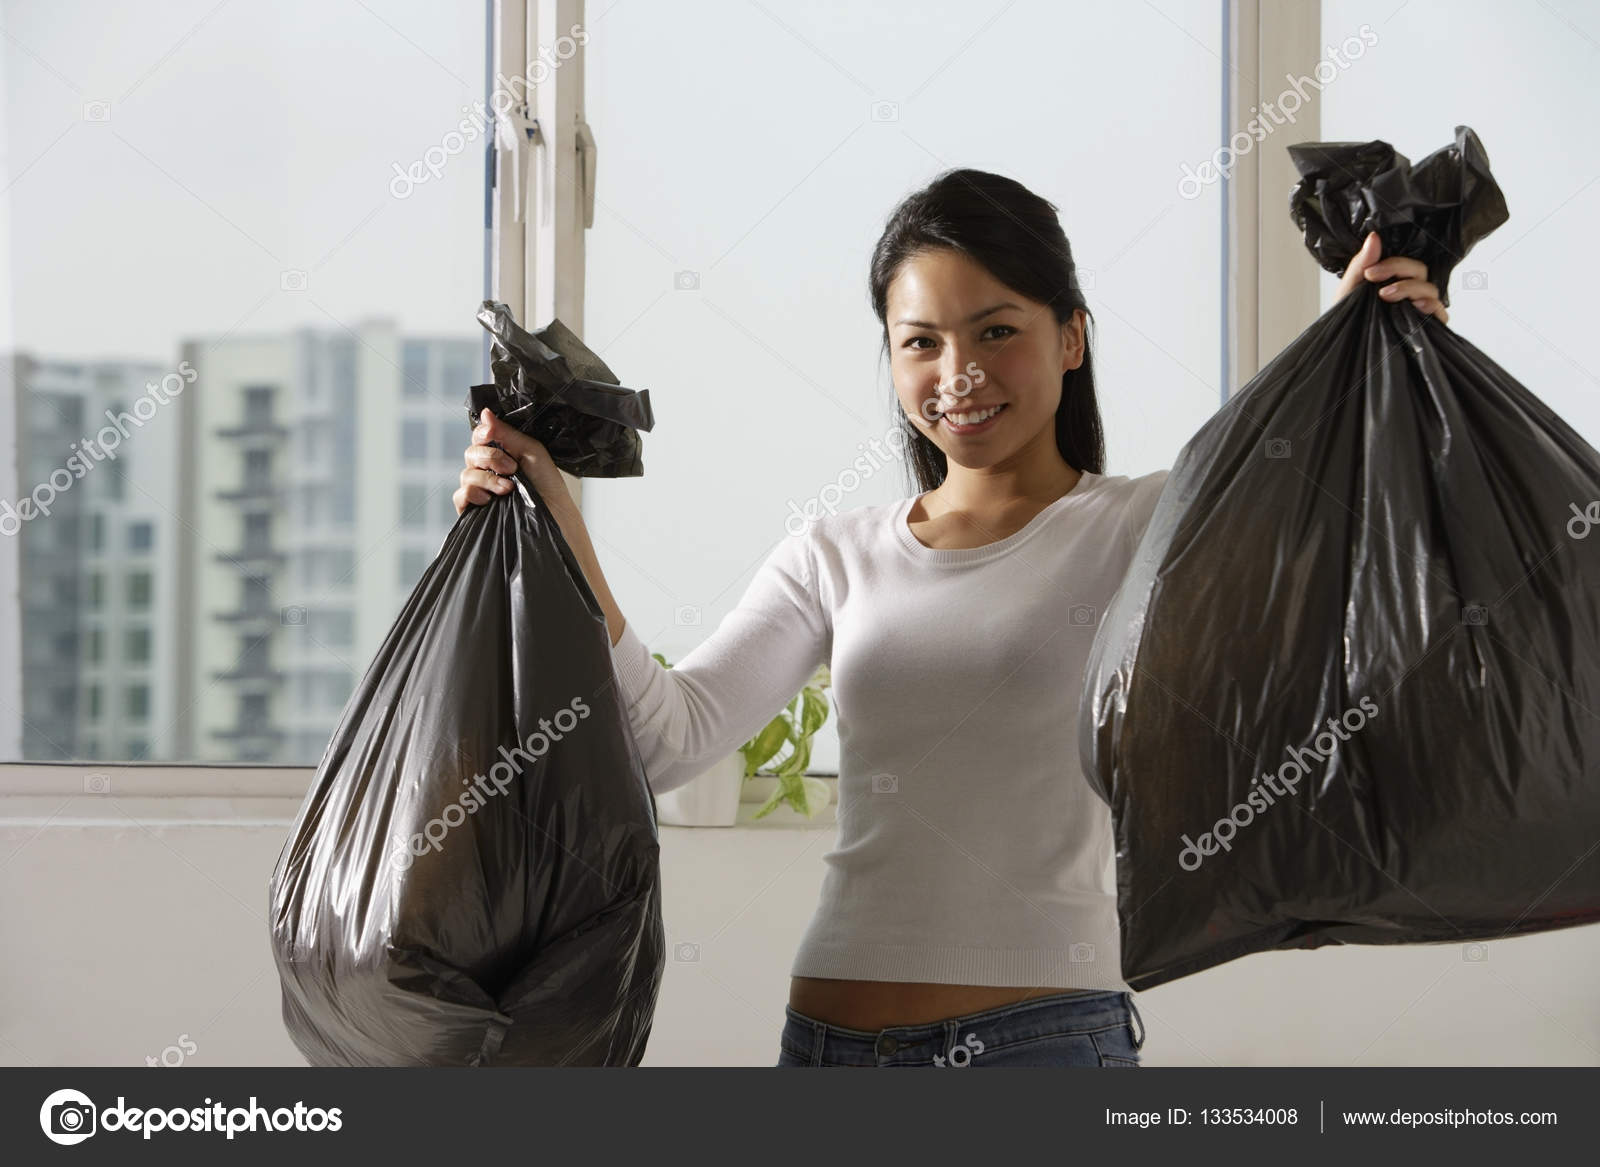 https://st3.depositphotos.com/2492691/13353/i/1600/depositphotos_133534008-stock-photo-woman-holding-up-trash-bags.jpg